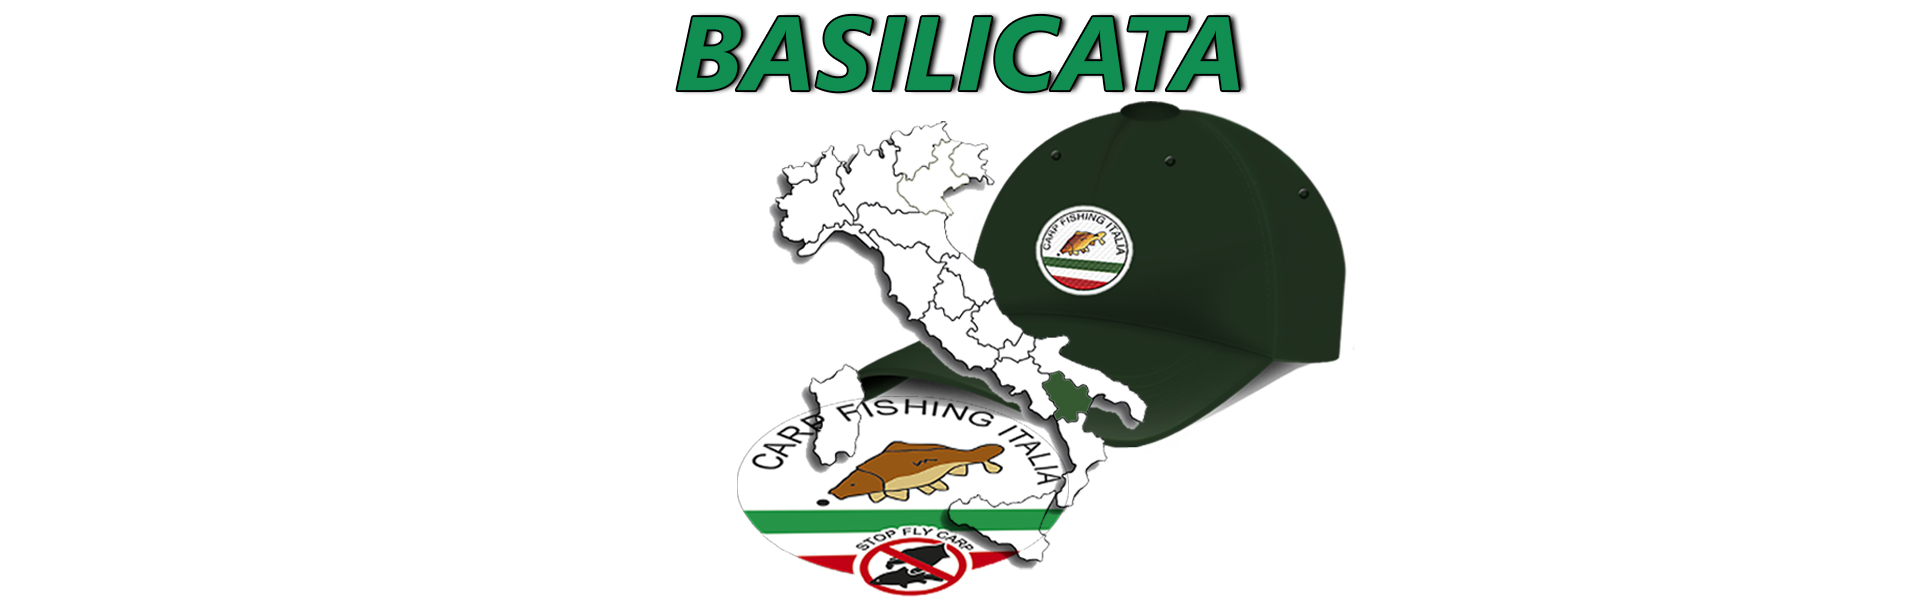 regione-basilicata